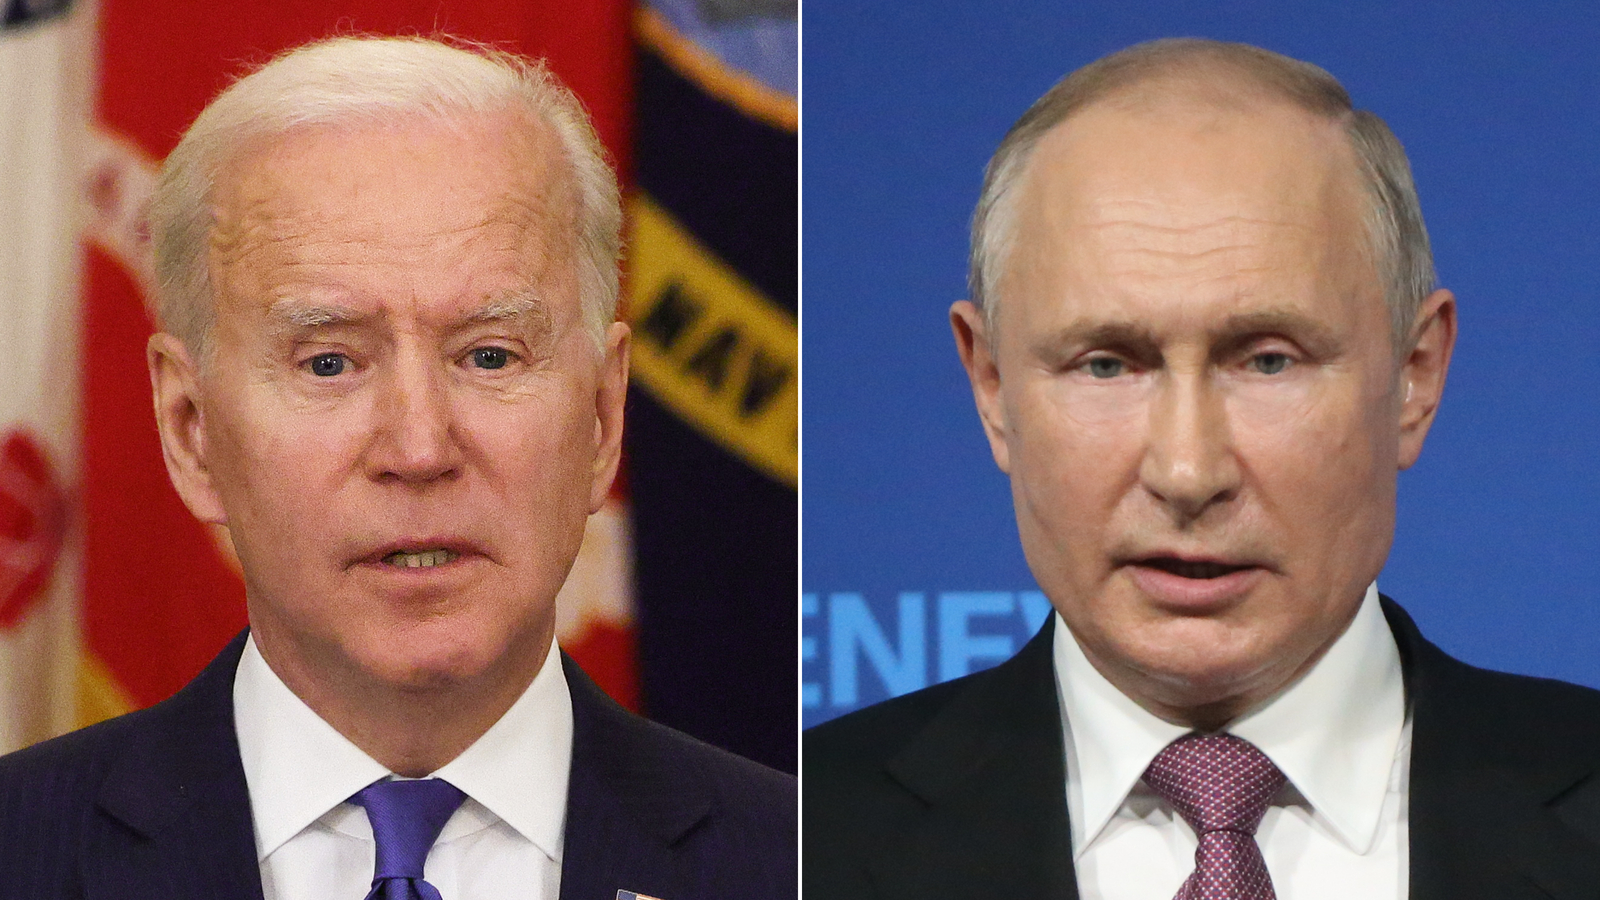 Biden says Putin is “looking for some oxygen” with ceasefire order in Ukraine